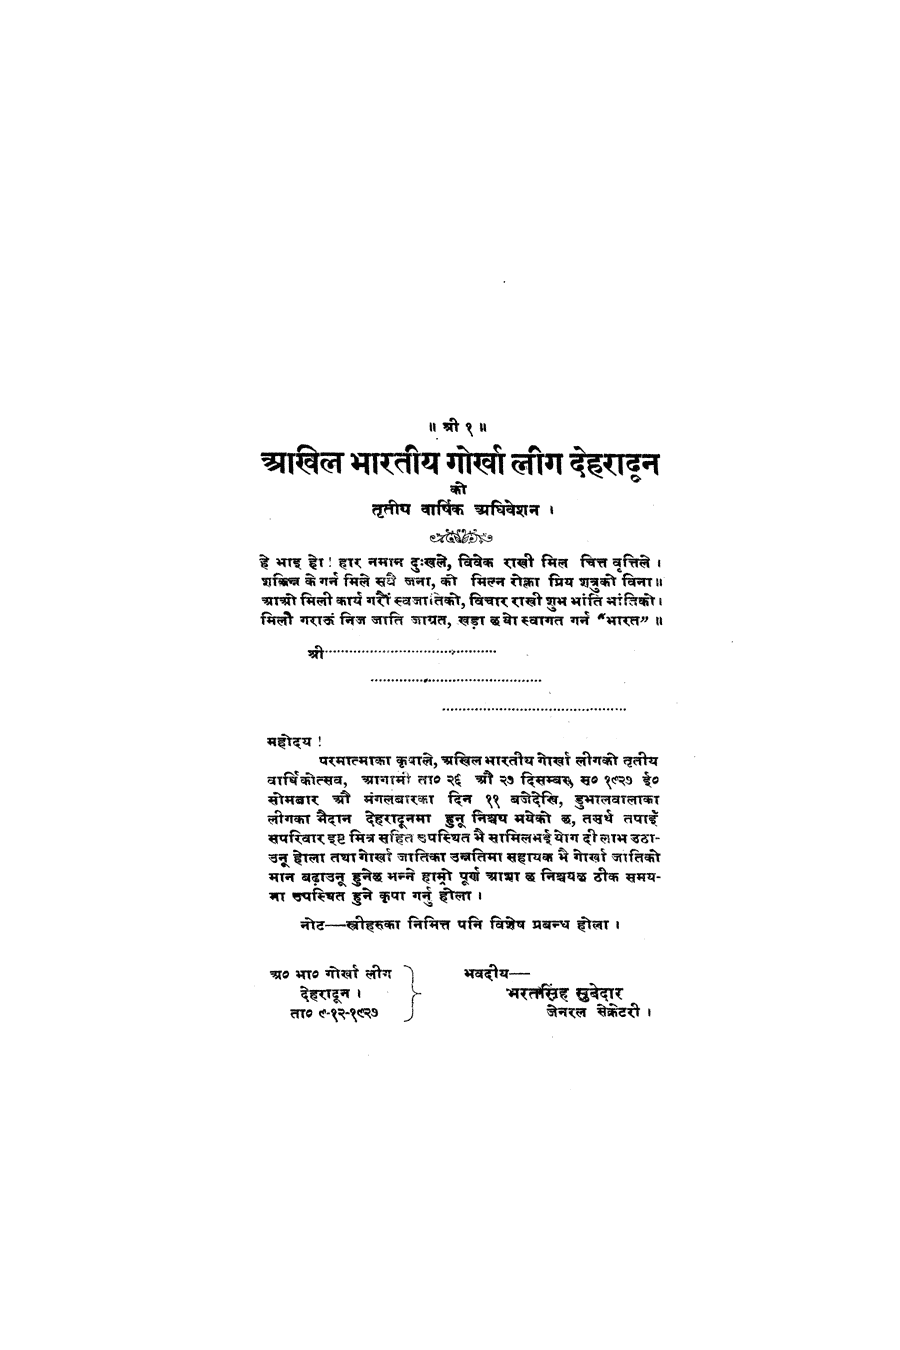 Gorkha Sansar, 5 Dec 1927, page 3